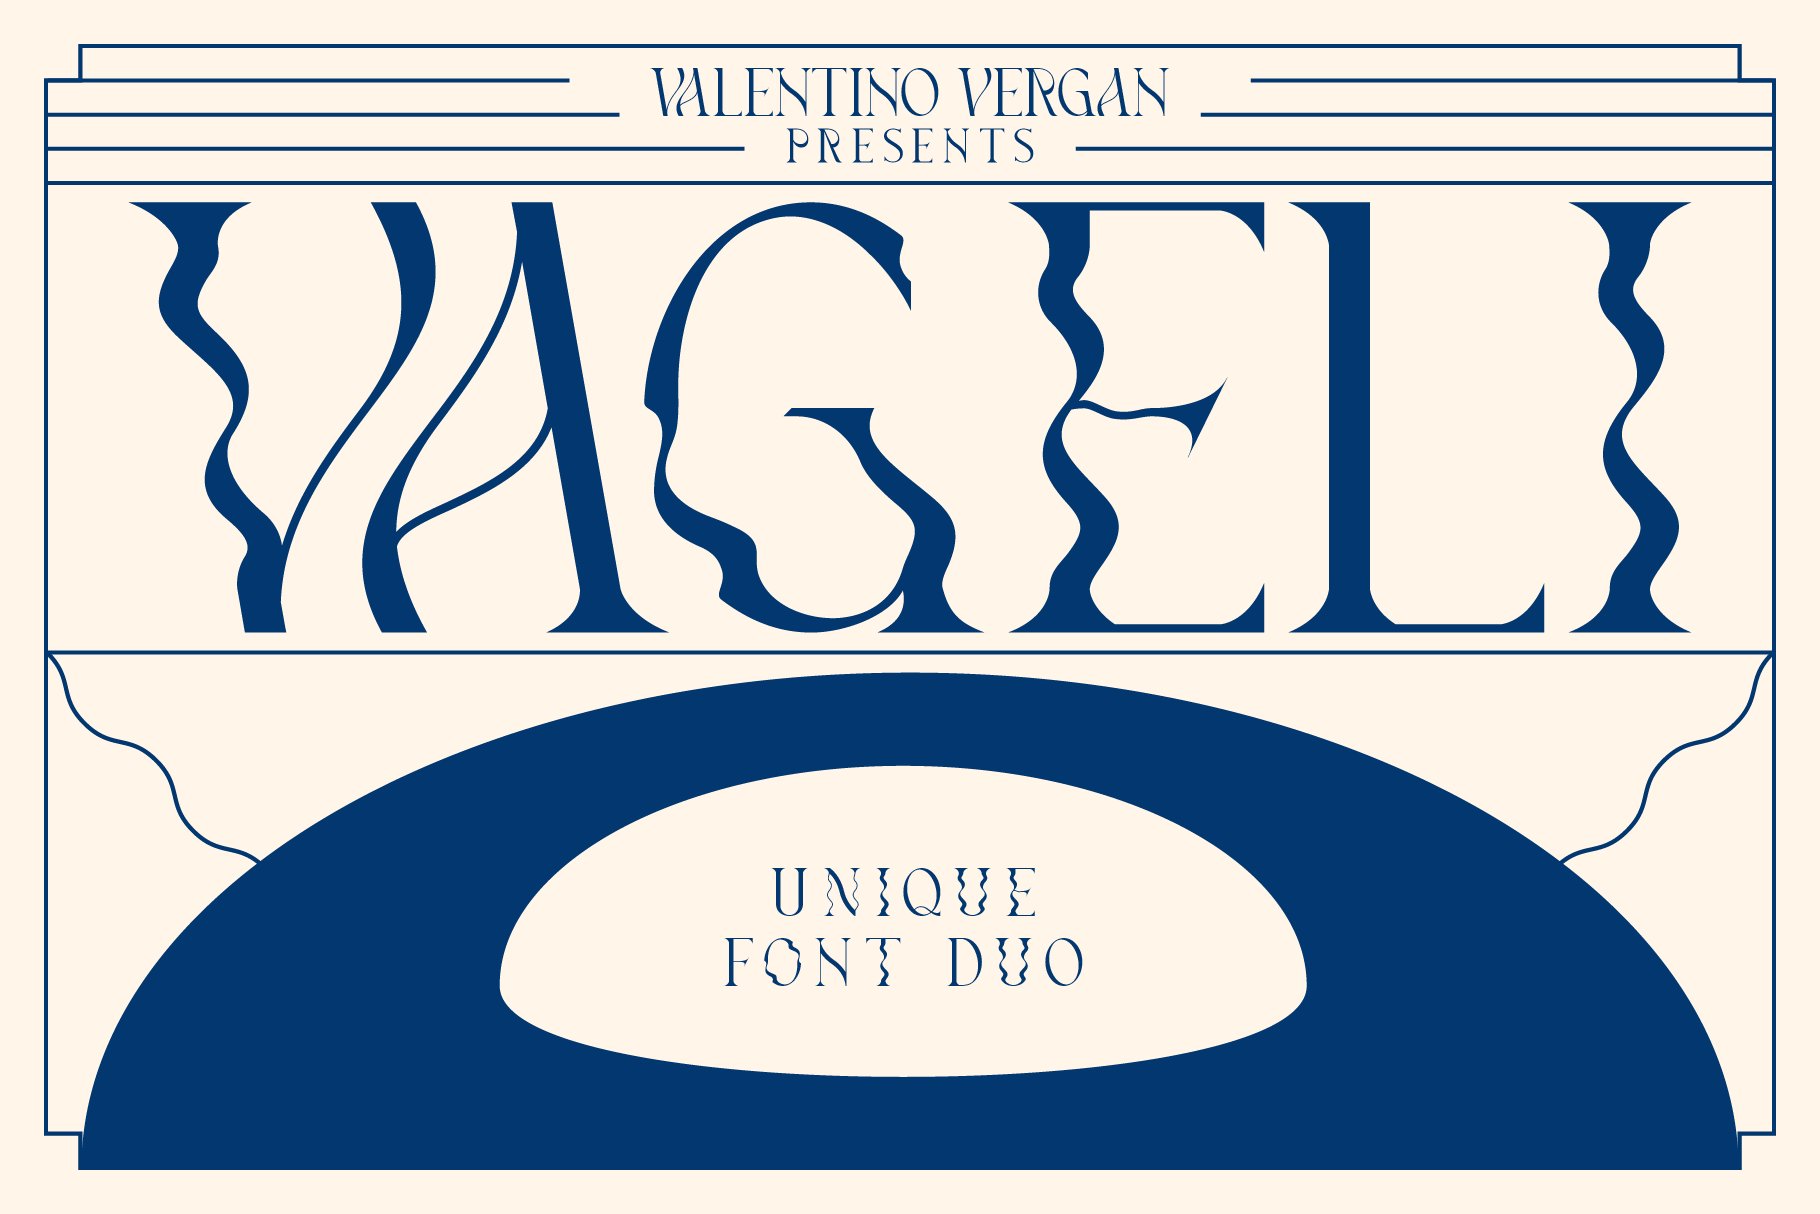 Vageli - Unique Font Duocover image.